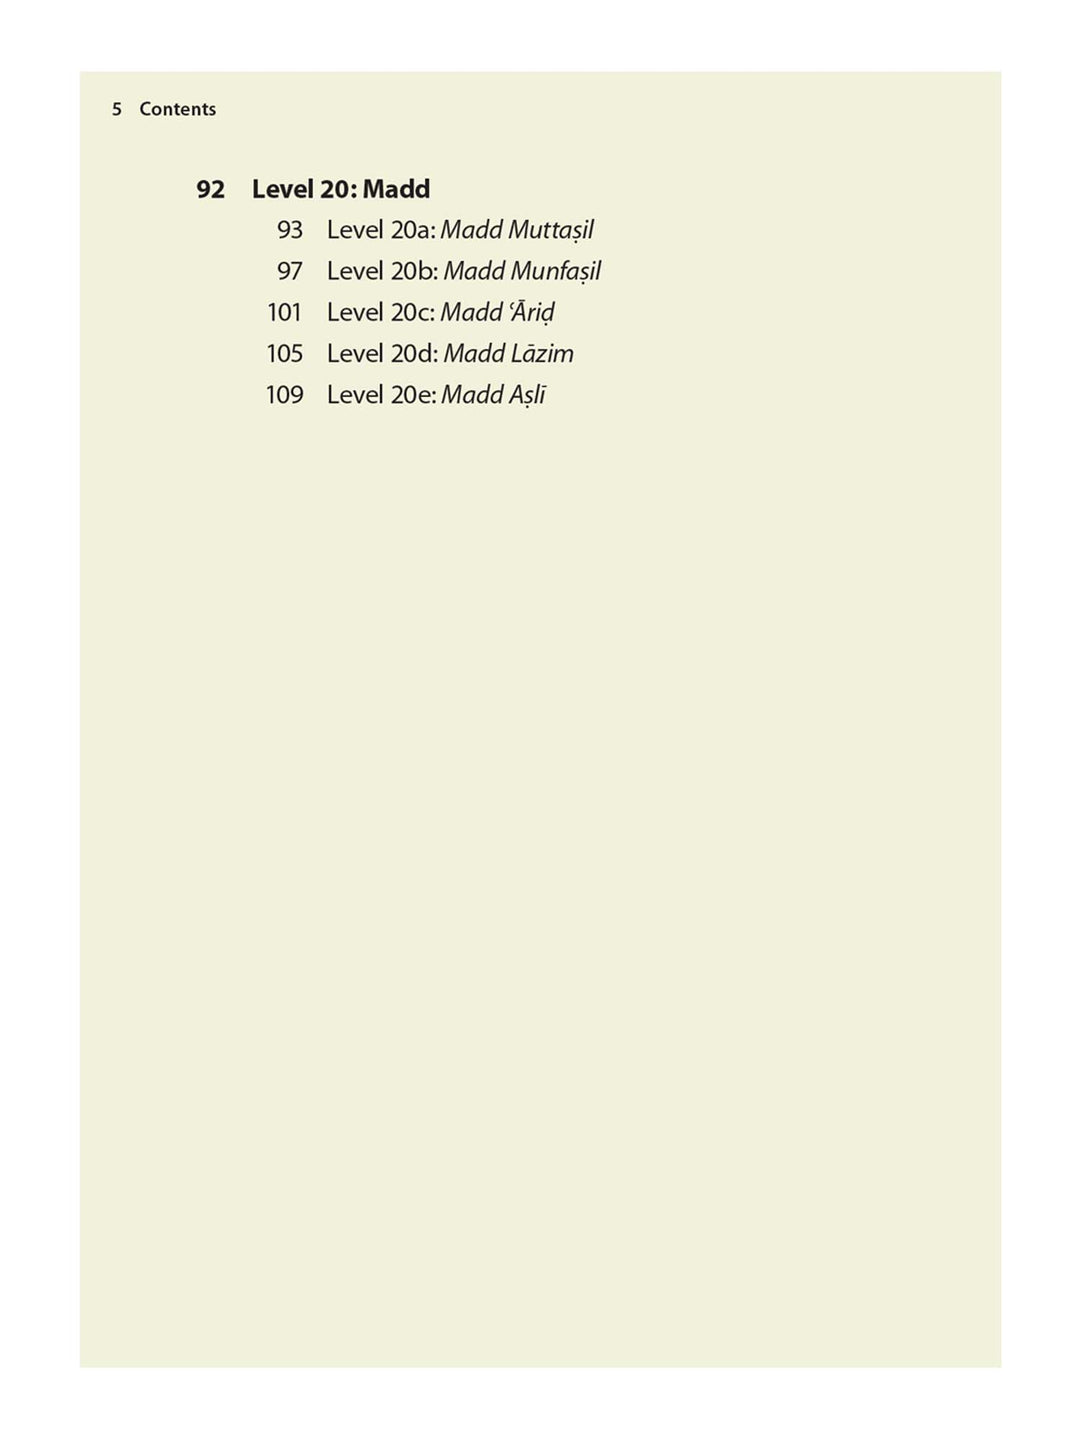 Rules of Tajwid - Madinah Script – Safar Learn to Read Series (Paperback)